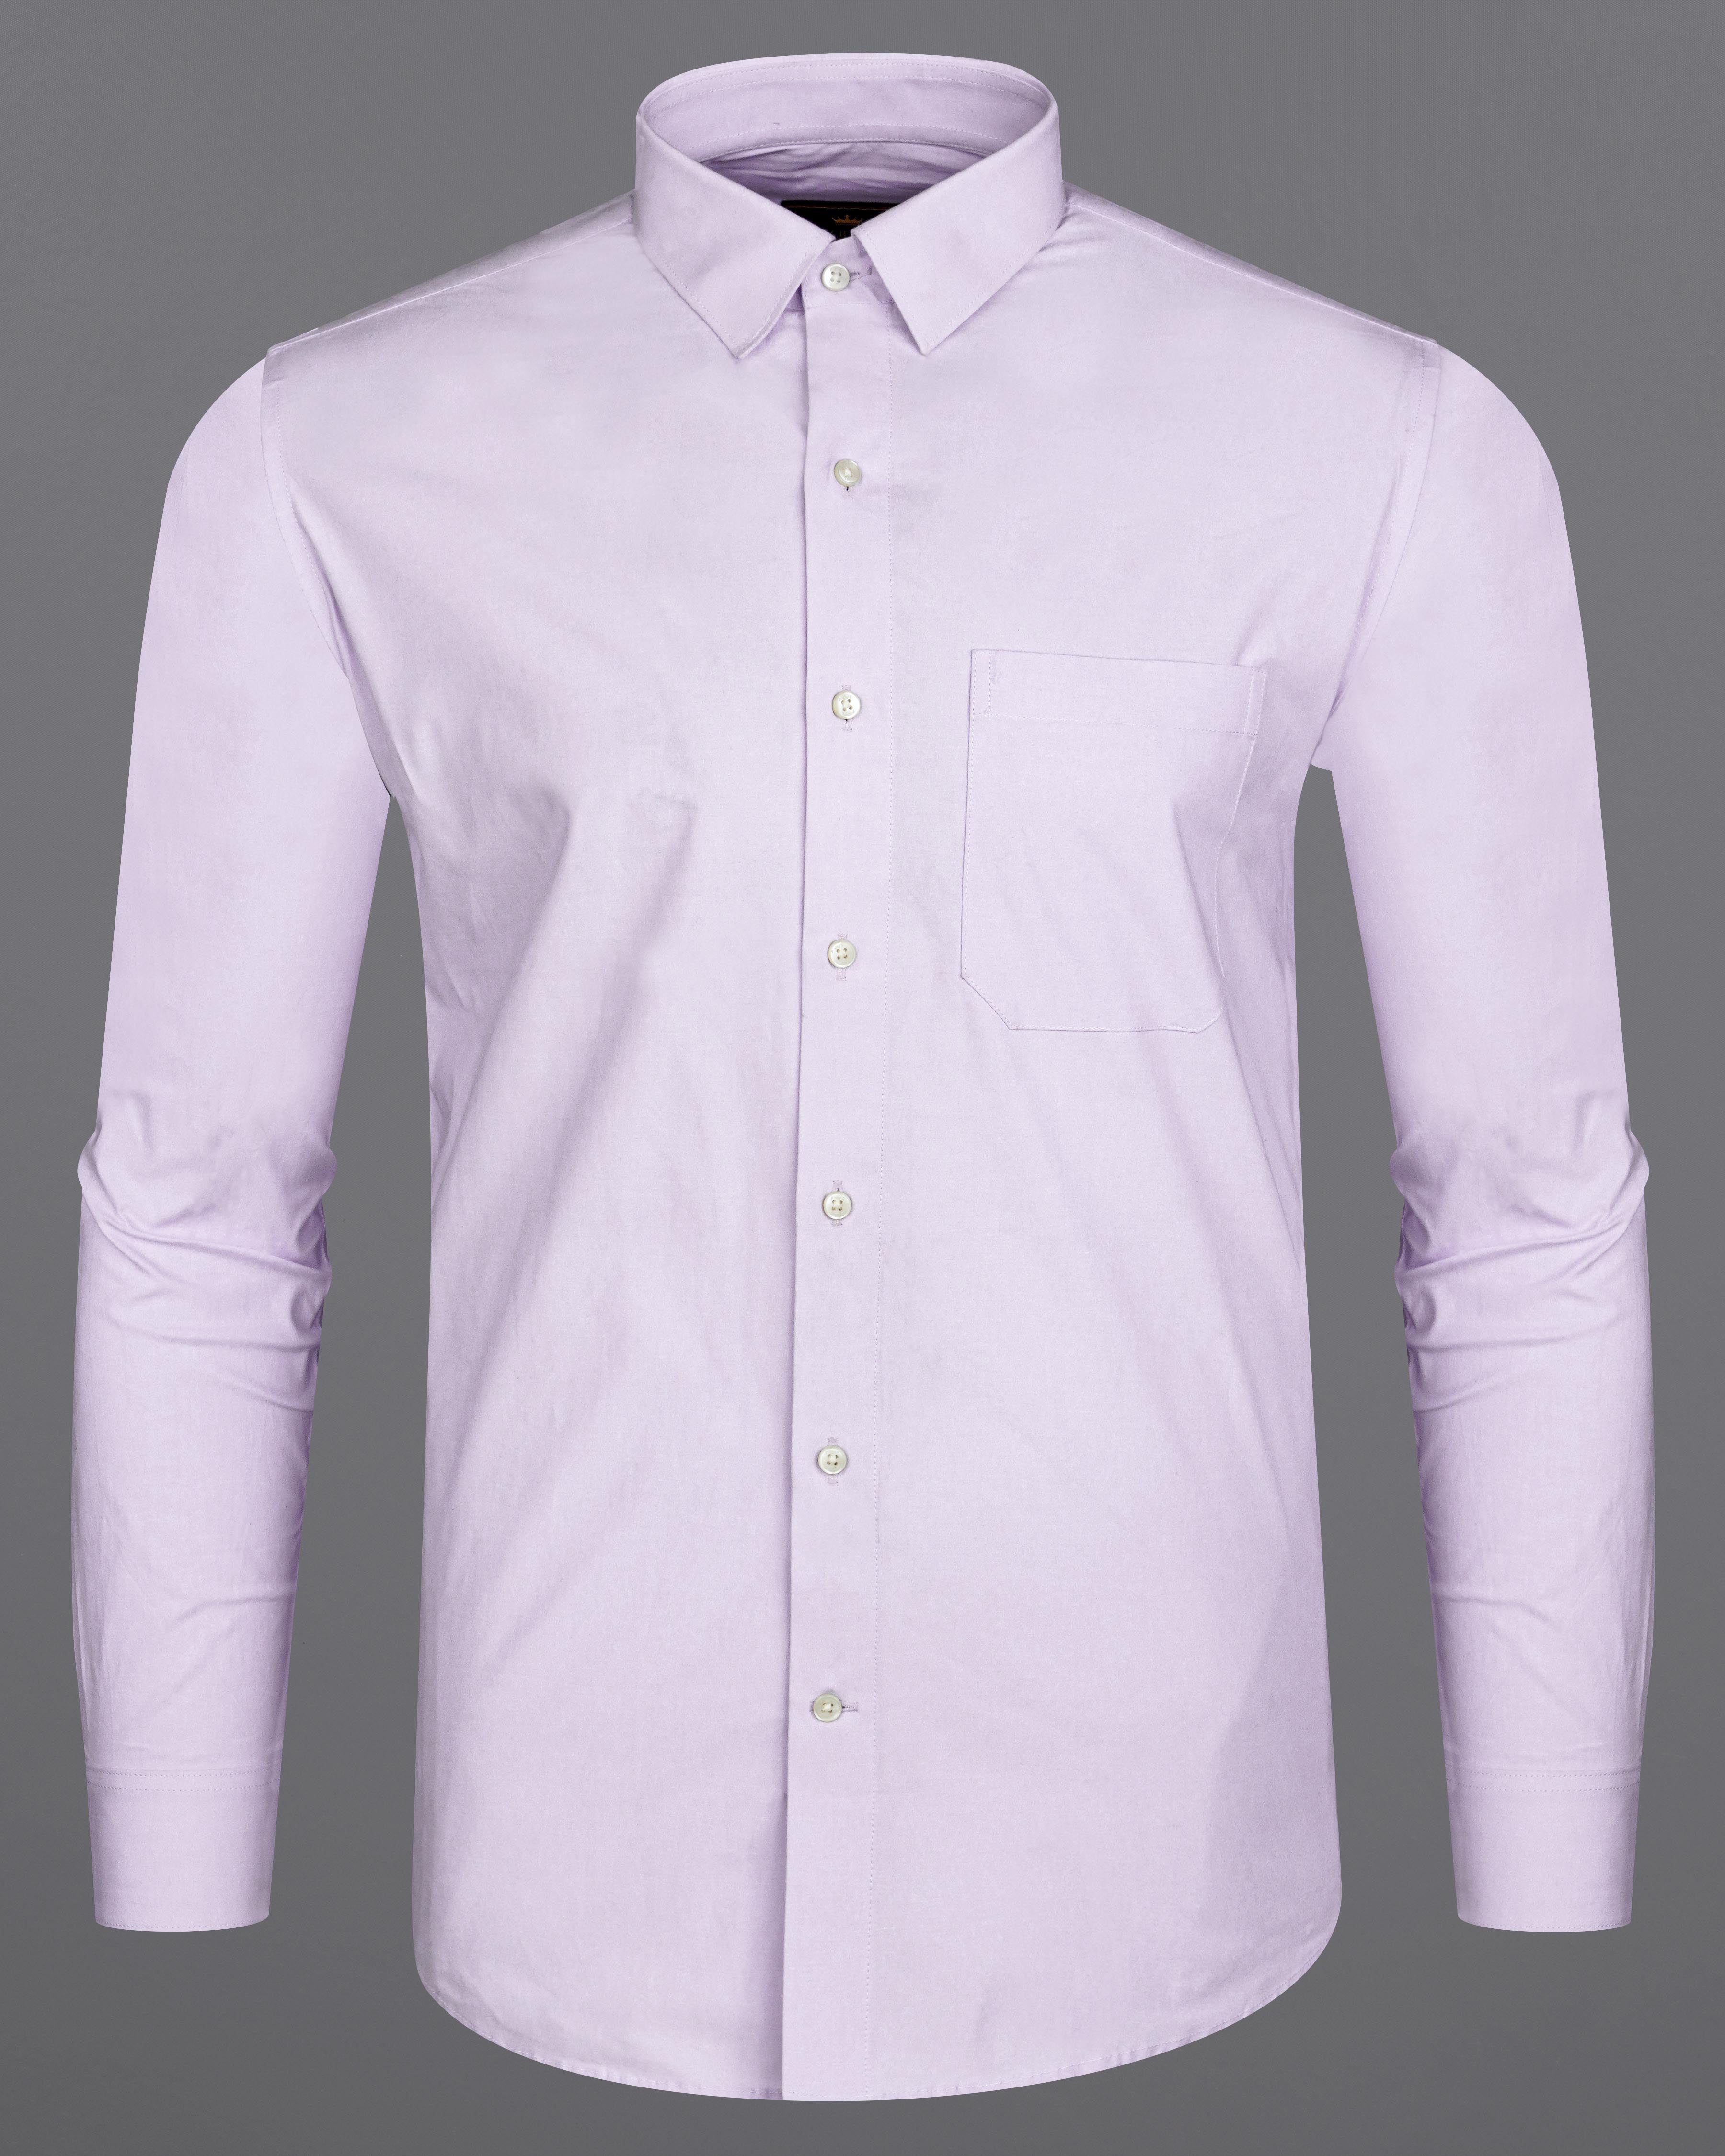 Mercury Purple Premium Cotton Shirt 8380-38, 8380-H-38, 8380-39,8380-H-39, 8380-40, 8380-H-40, 8380-42, 8380-H-42, 8380-44, 8380-H-44, 8380-46, 8380-H-46, 8380-48, 8380-H-48, 8380-50, 8380-H-50, 8380-52, 8380-H-52